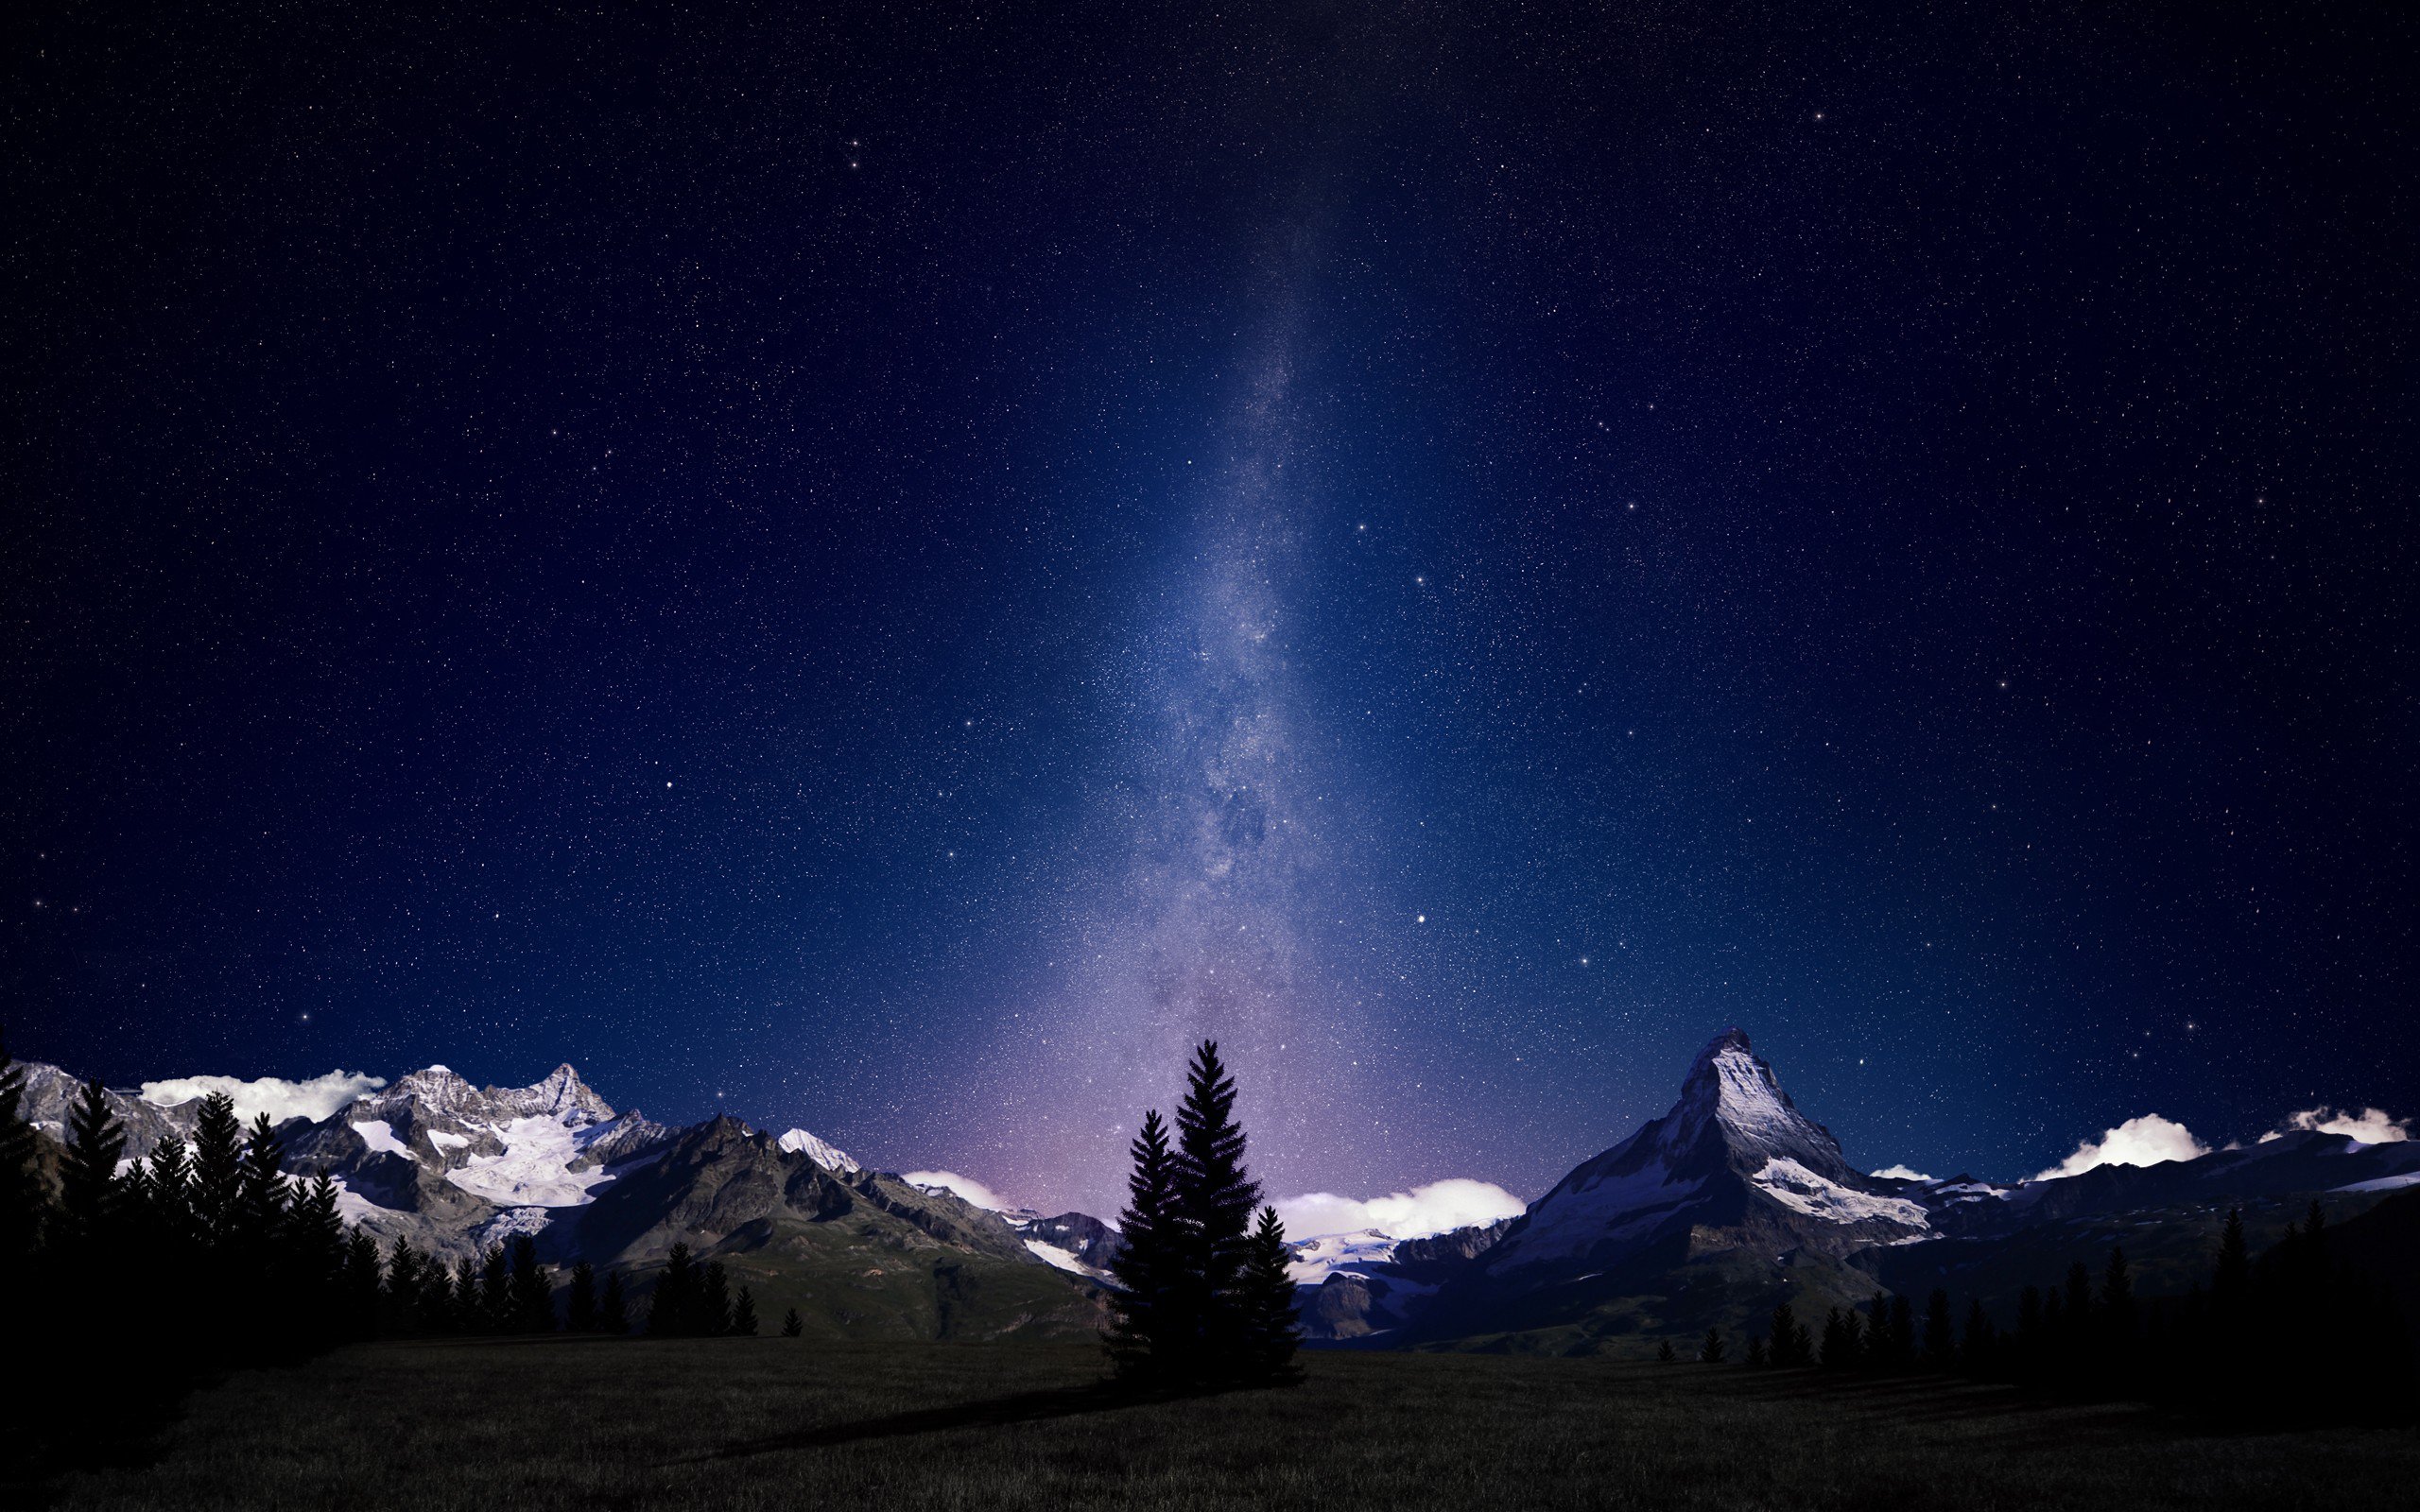 Night Sky in the Alps | Night skies, Sky, Galaxy colors